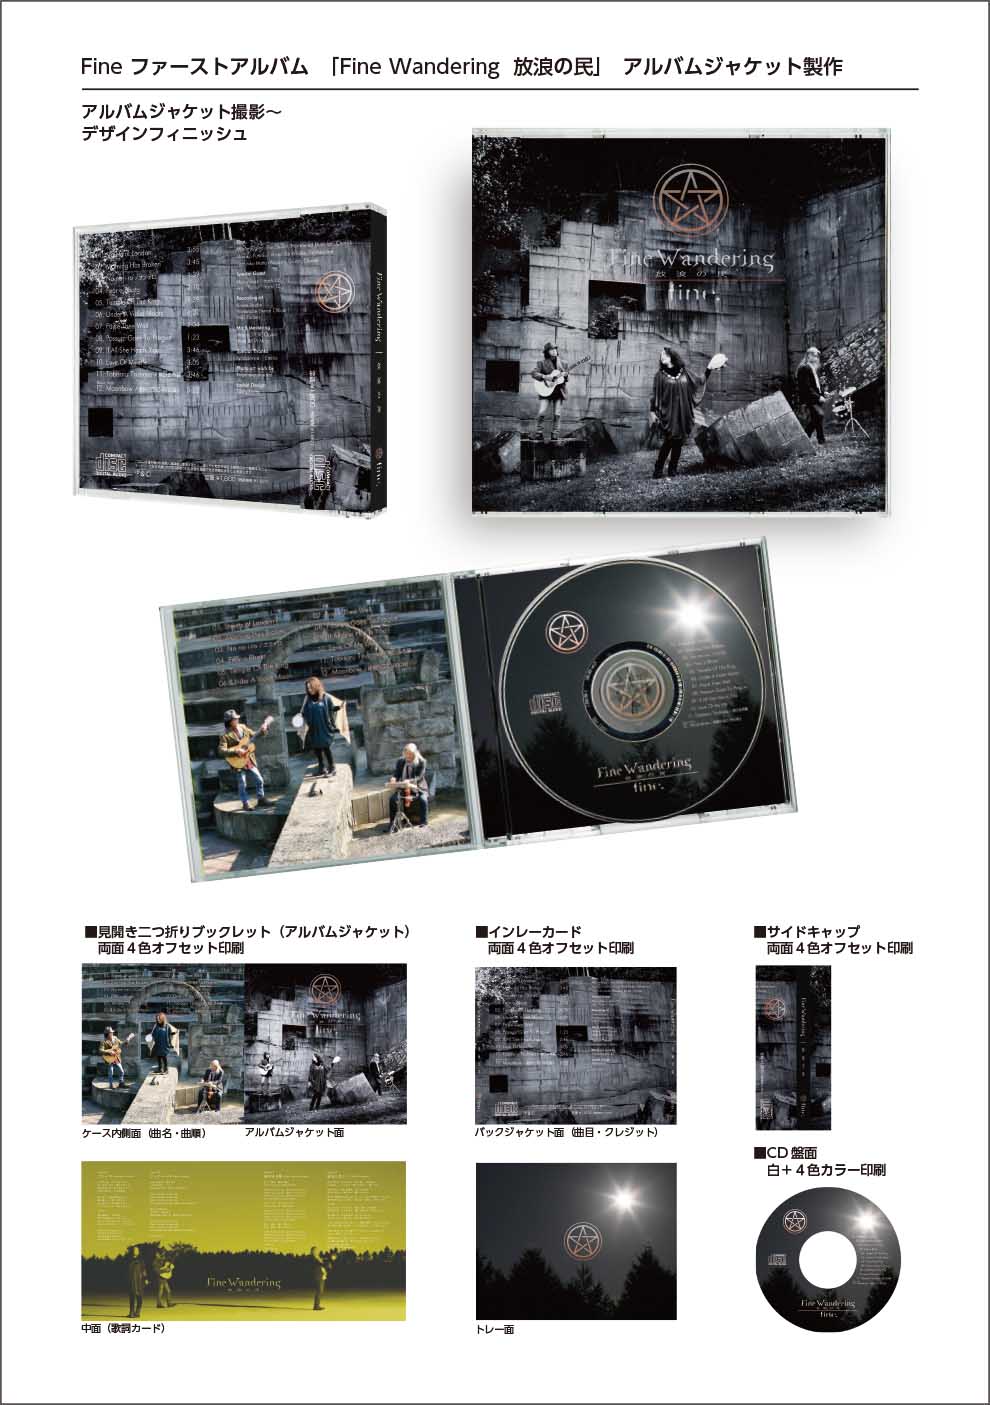 alt="影猫商会,fine、cd-artworks"